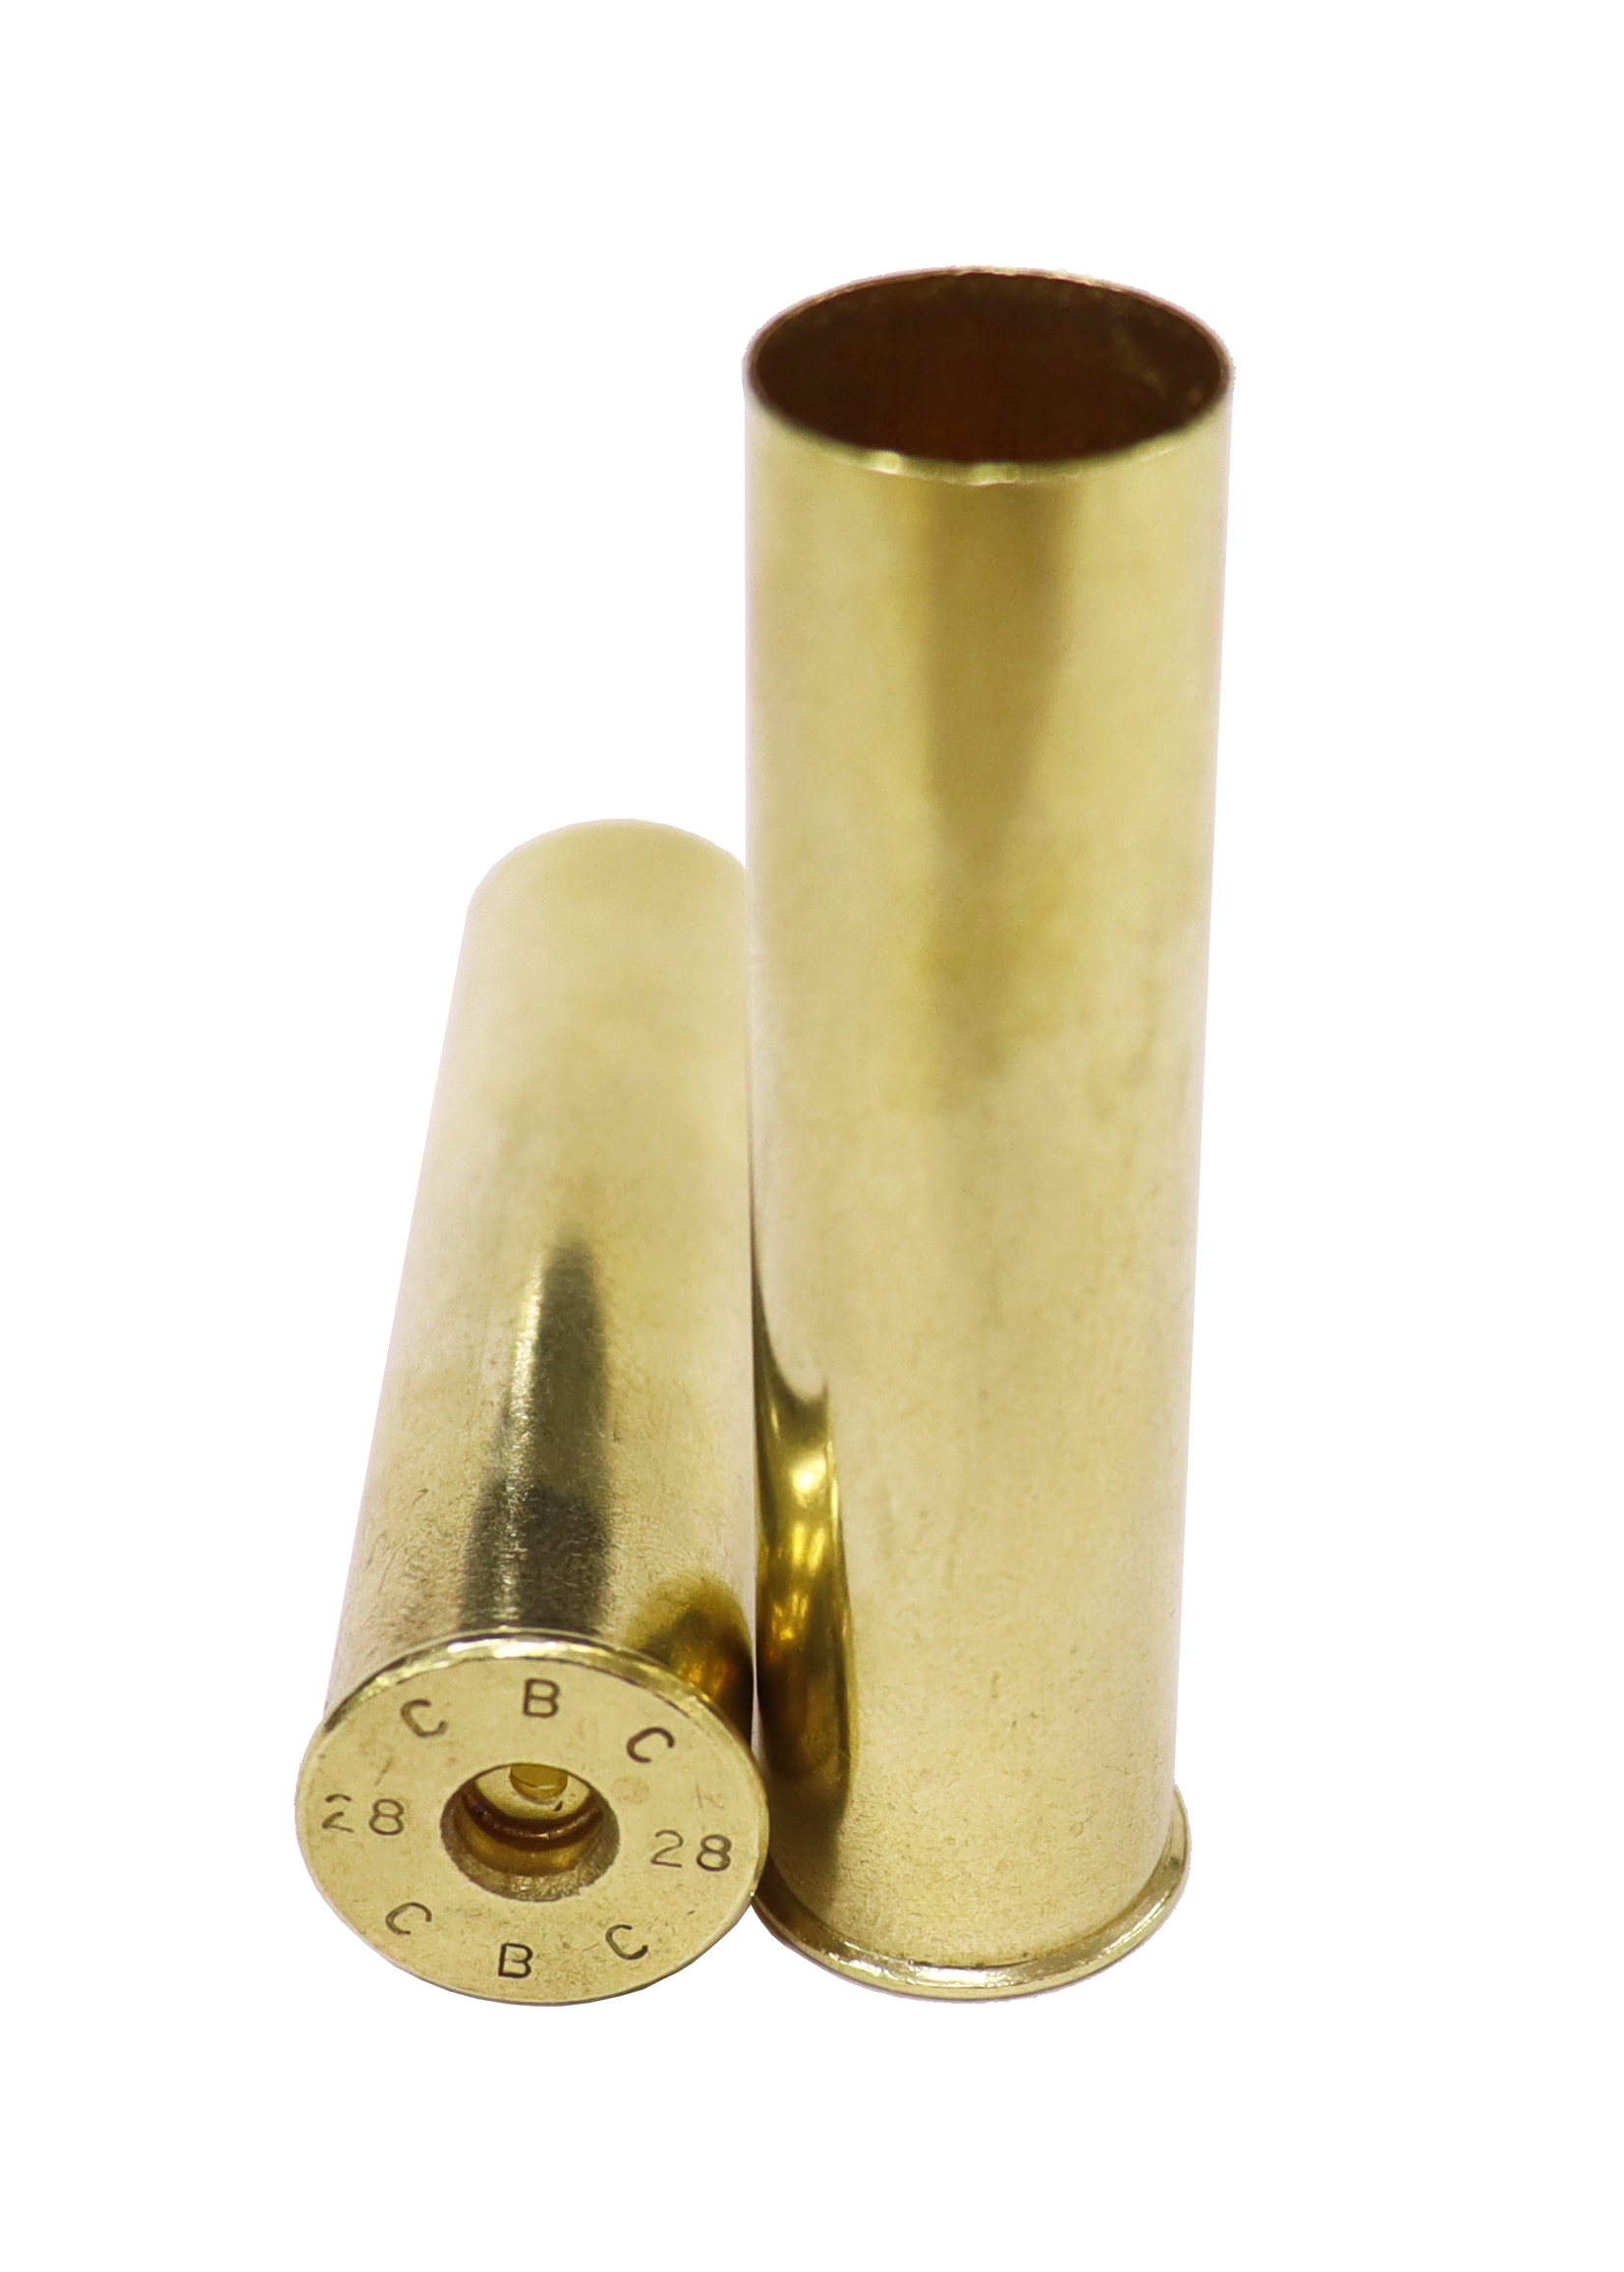 Magtech 28 Gauge Brass Cased Shotshell Ammunition SBR28